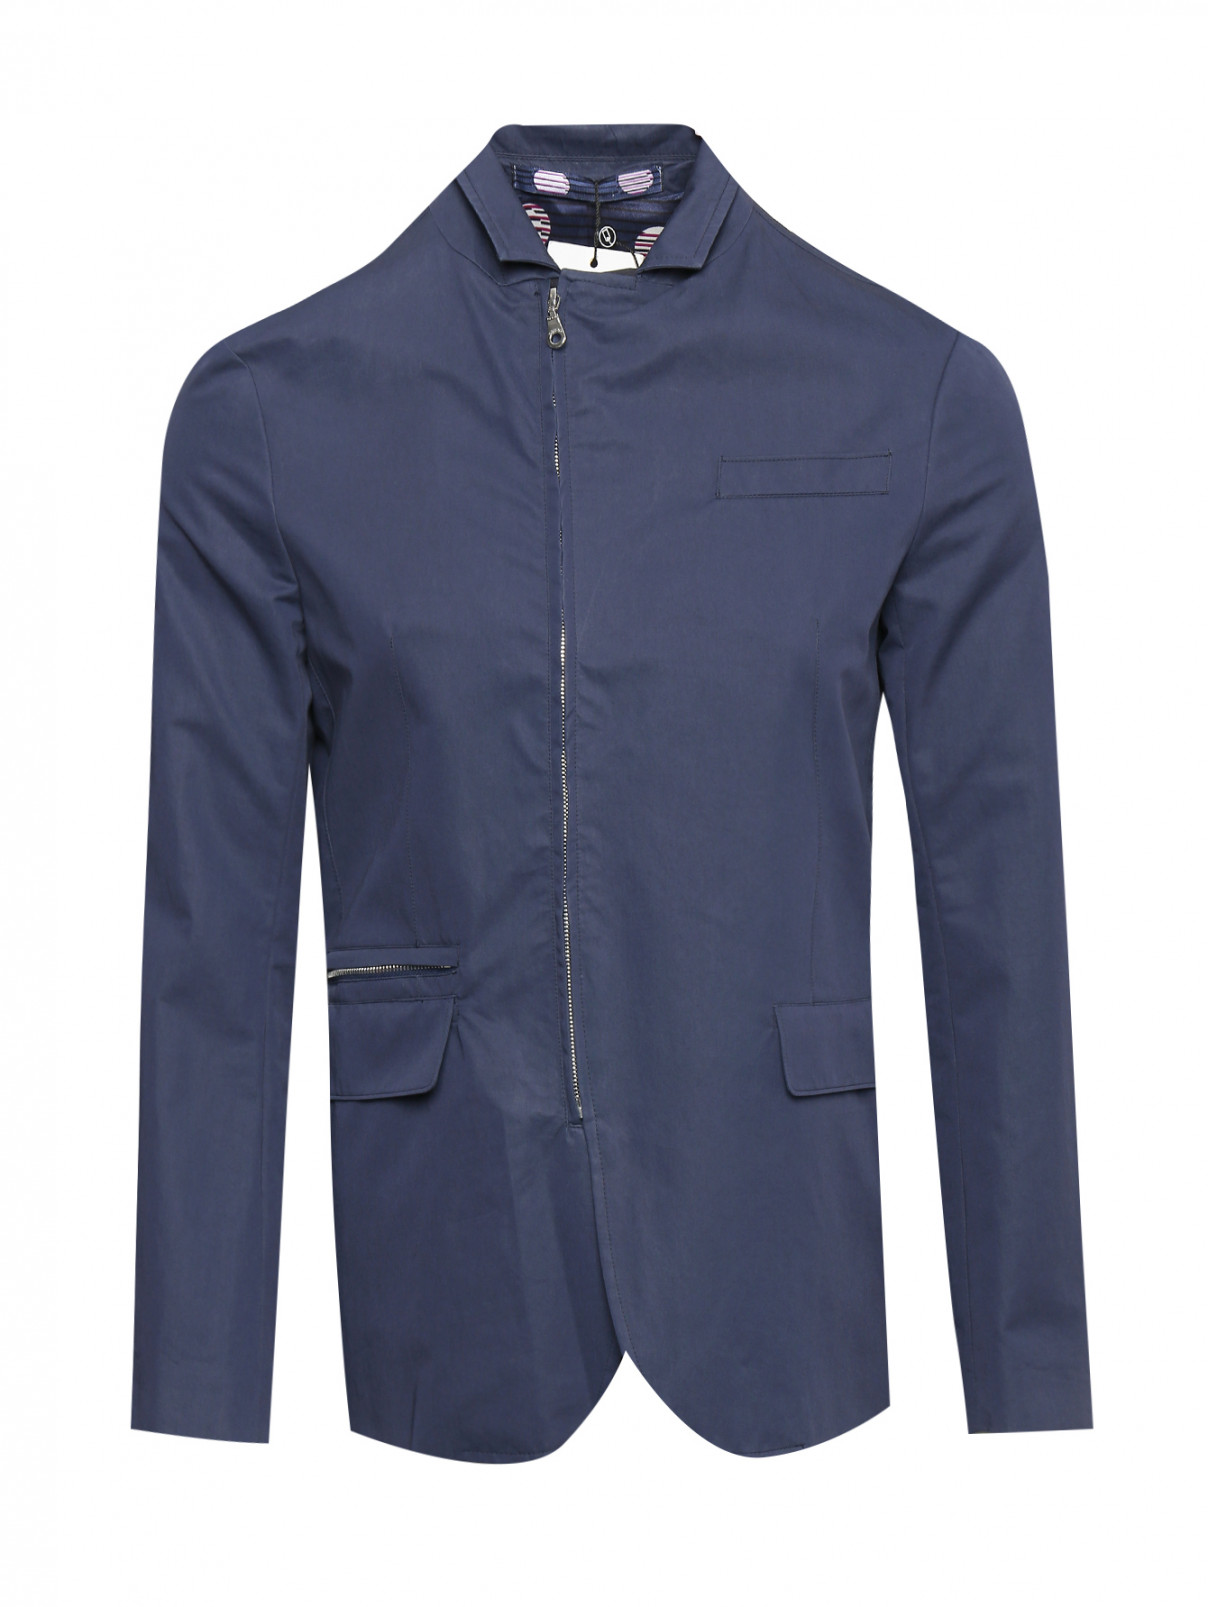 Куртка на молнии Kenzo  –  Общий вид  – Цвет:  Синий